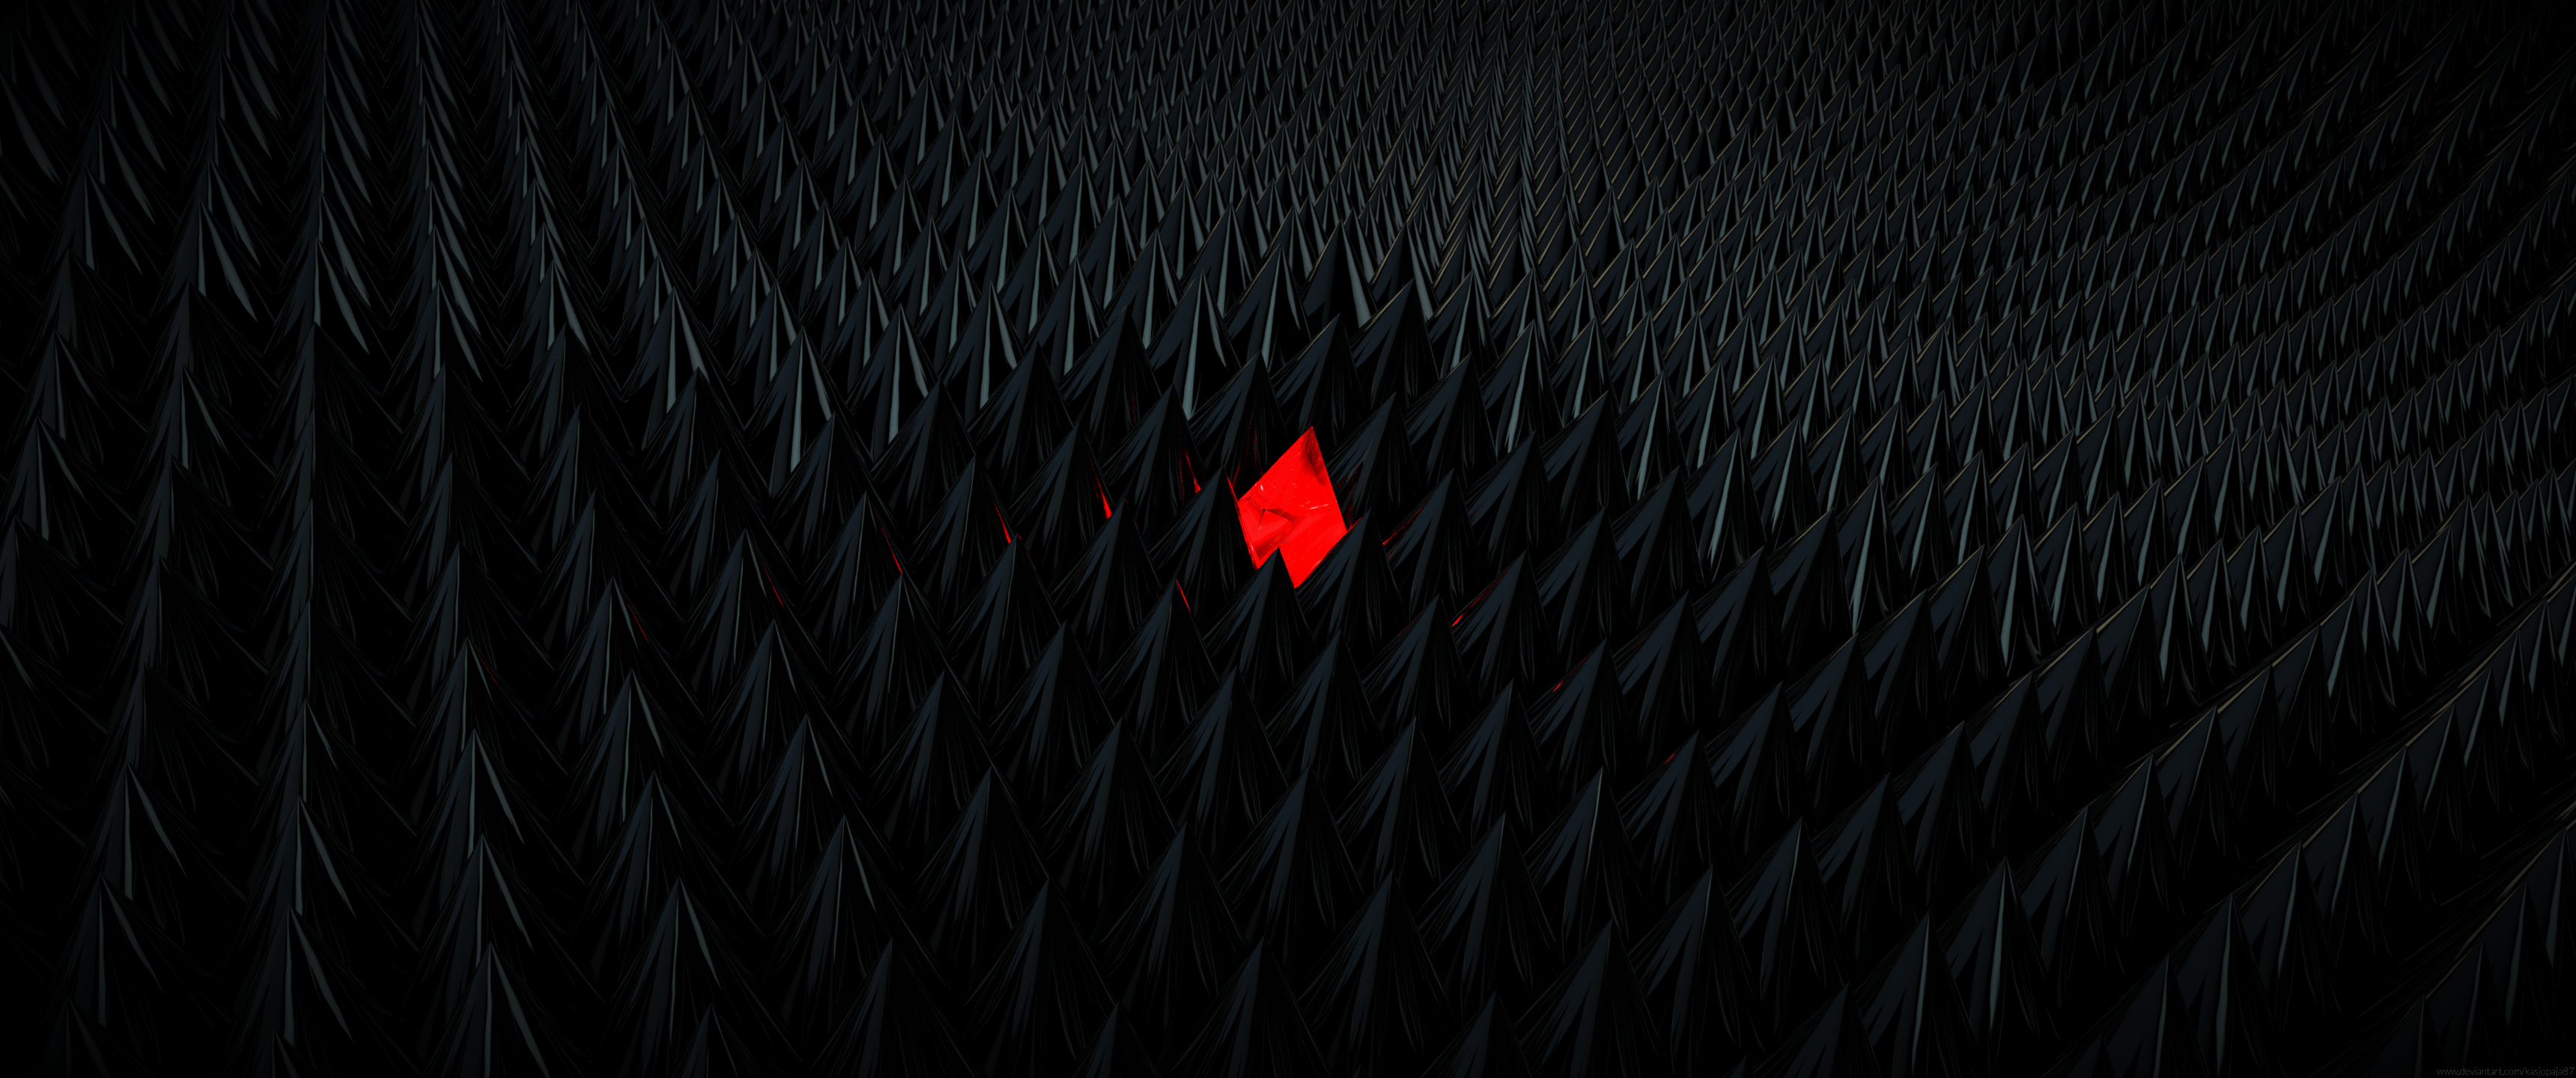 UWQHD, 3D, black, abstract, red, Nvidia